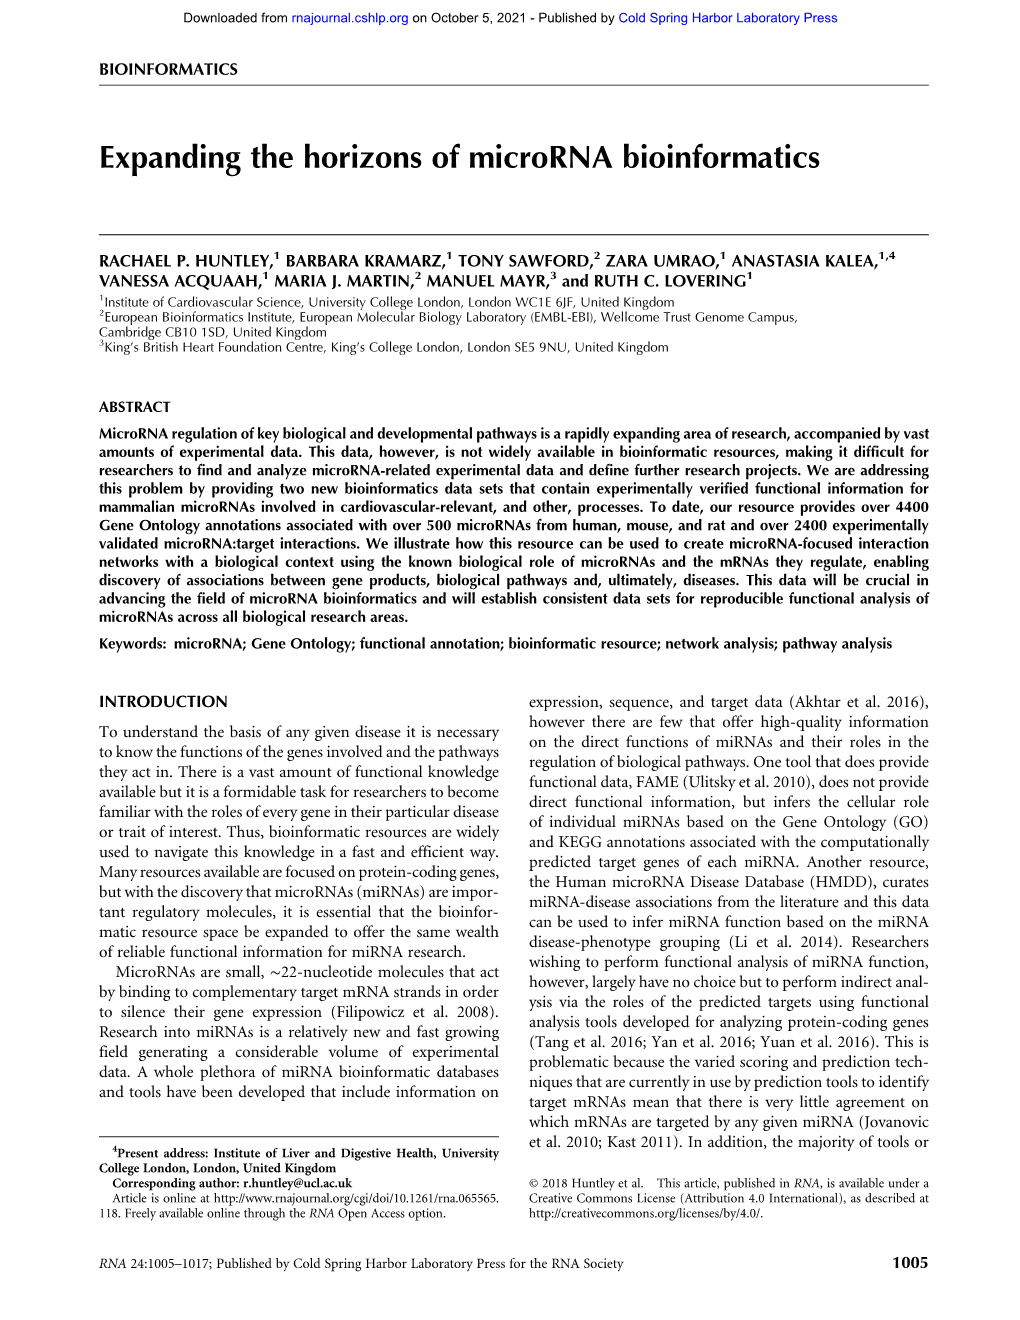 Expanding the Horizons of Microrna Bioinformatics